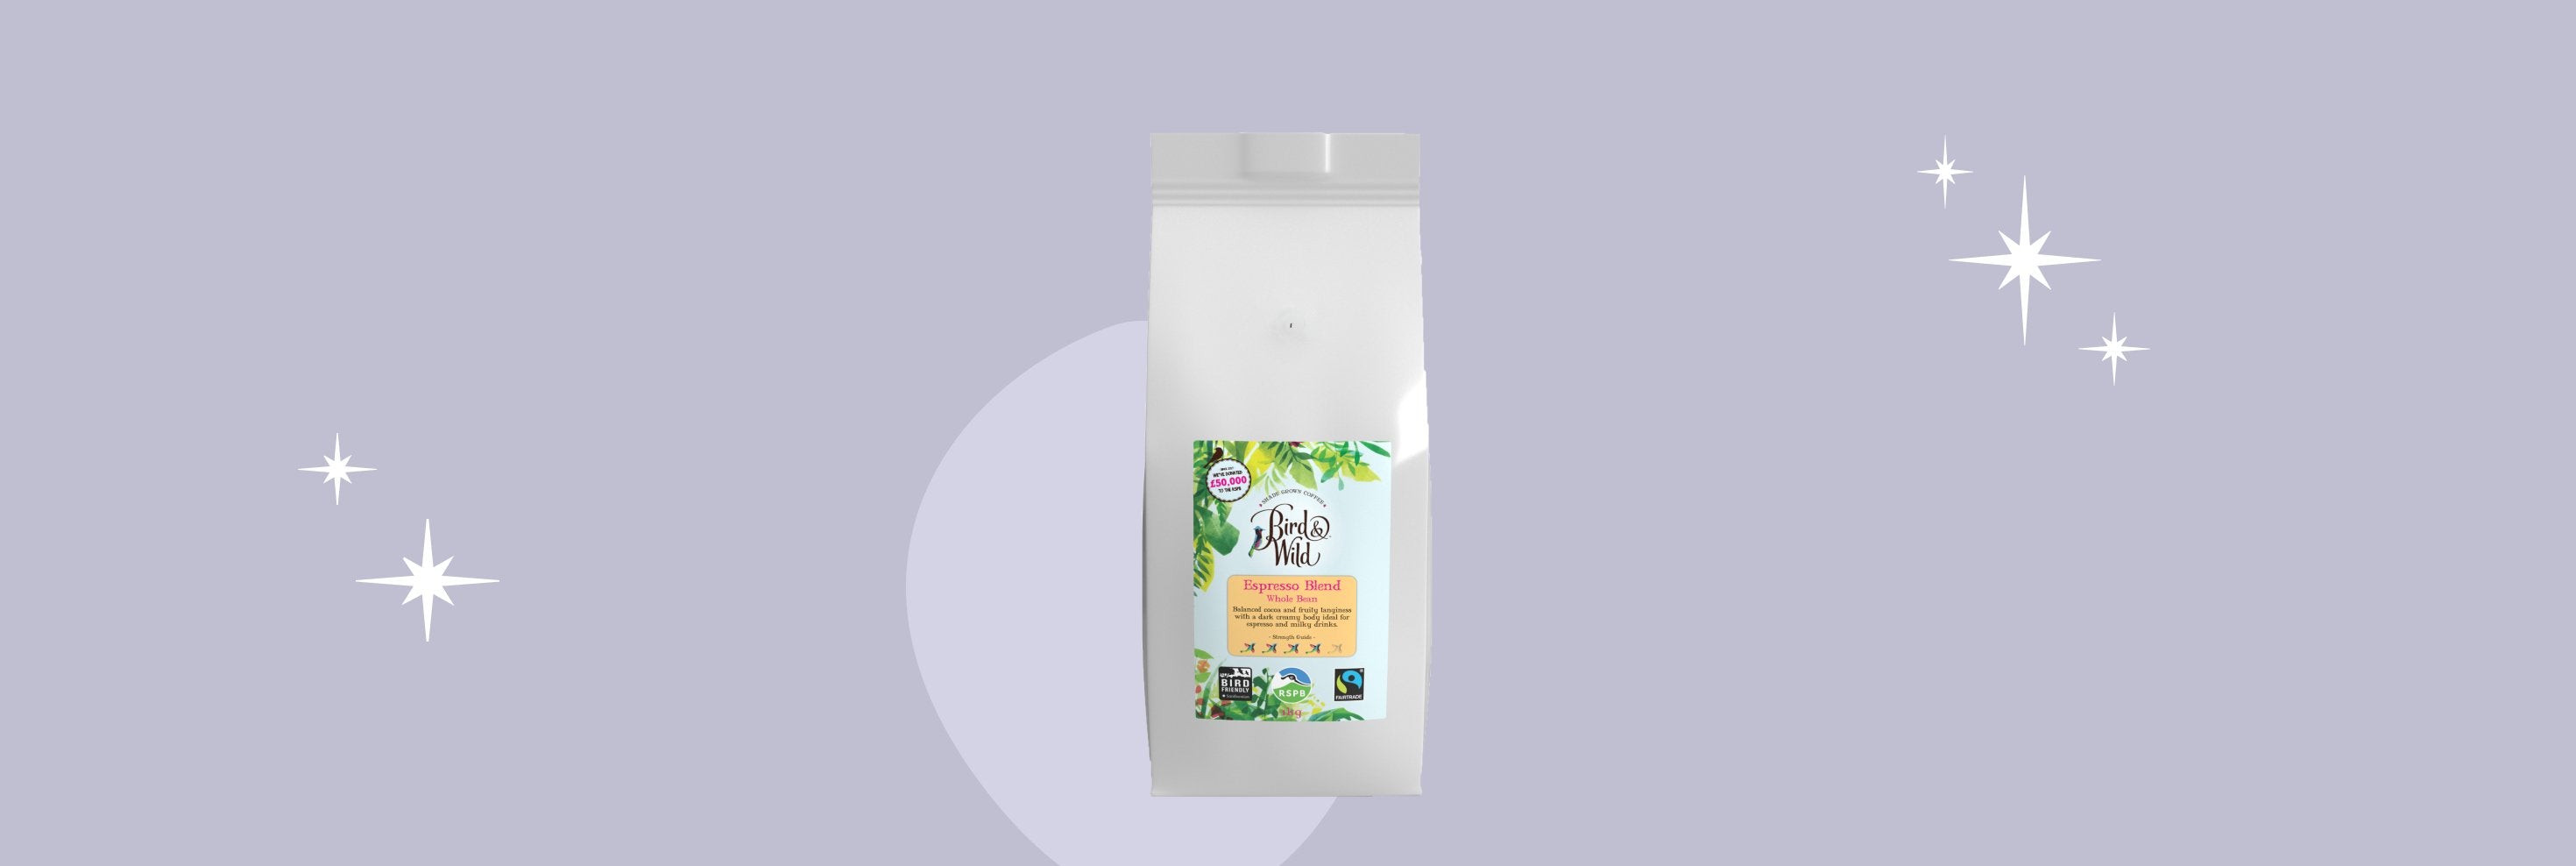 Bird & Wild Coffee's 500g & 1kg Bags are now 100% domestically recyclable - Bird & Wild Coffee